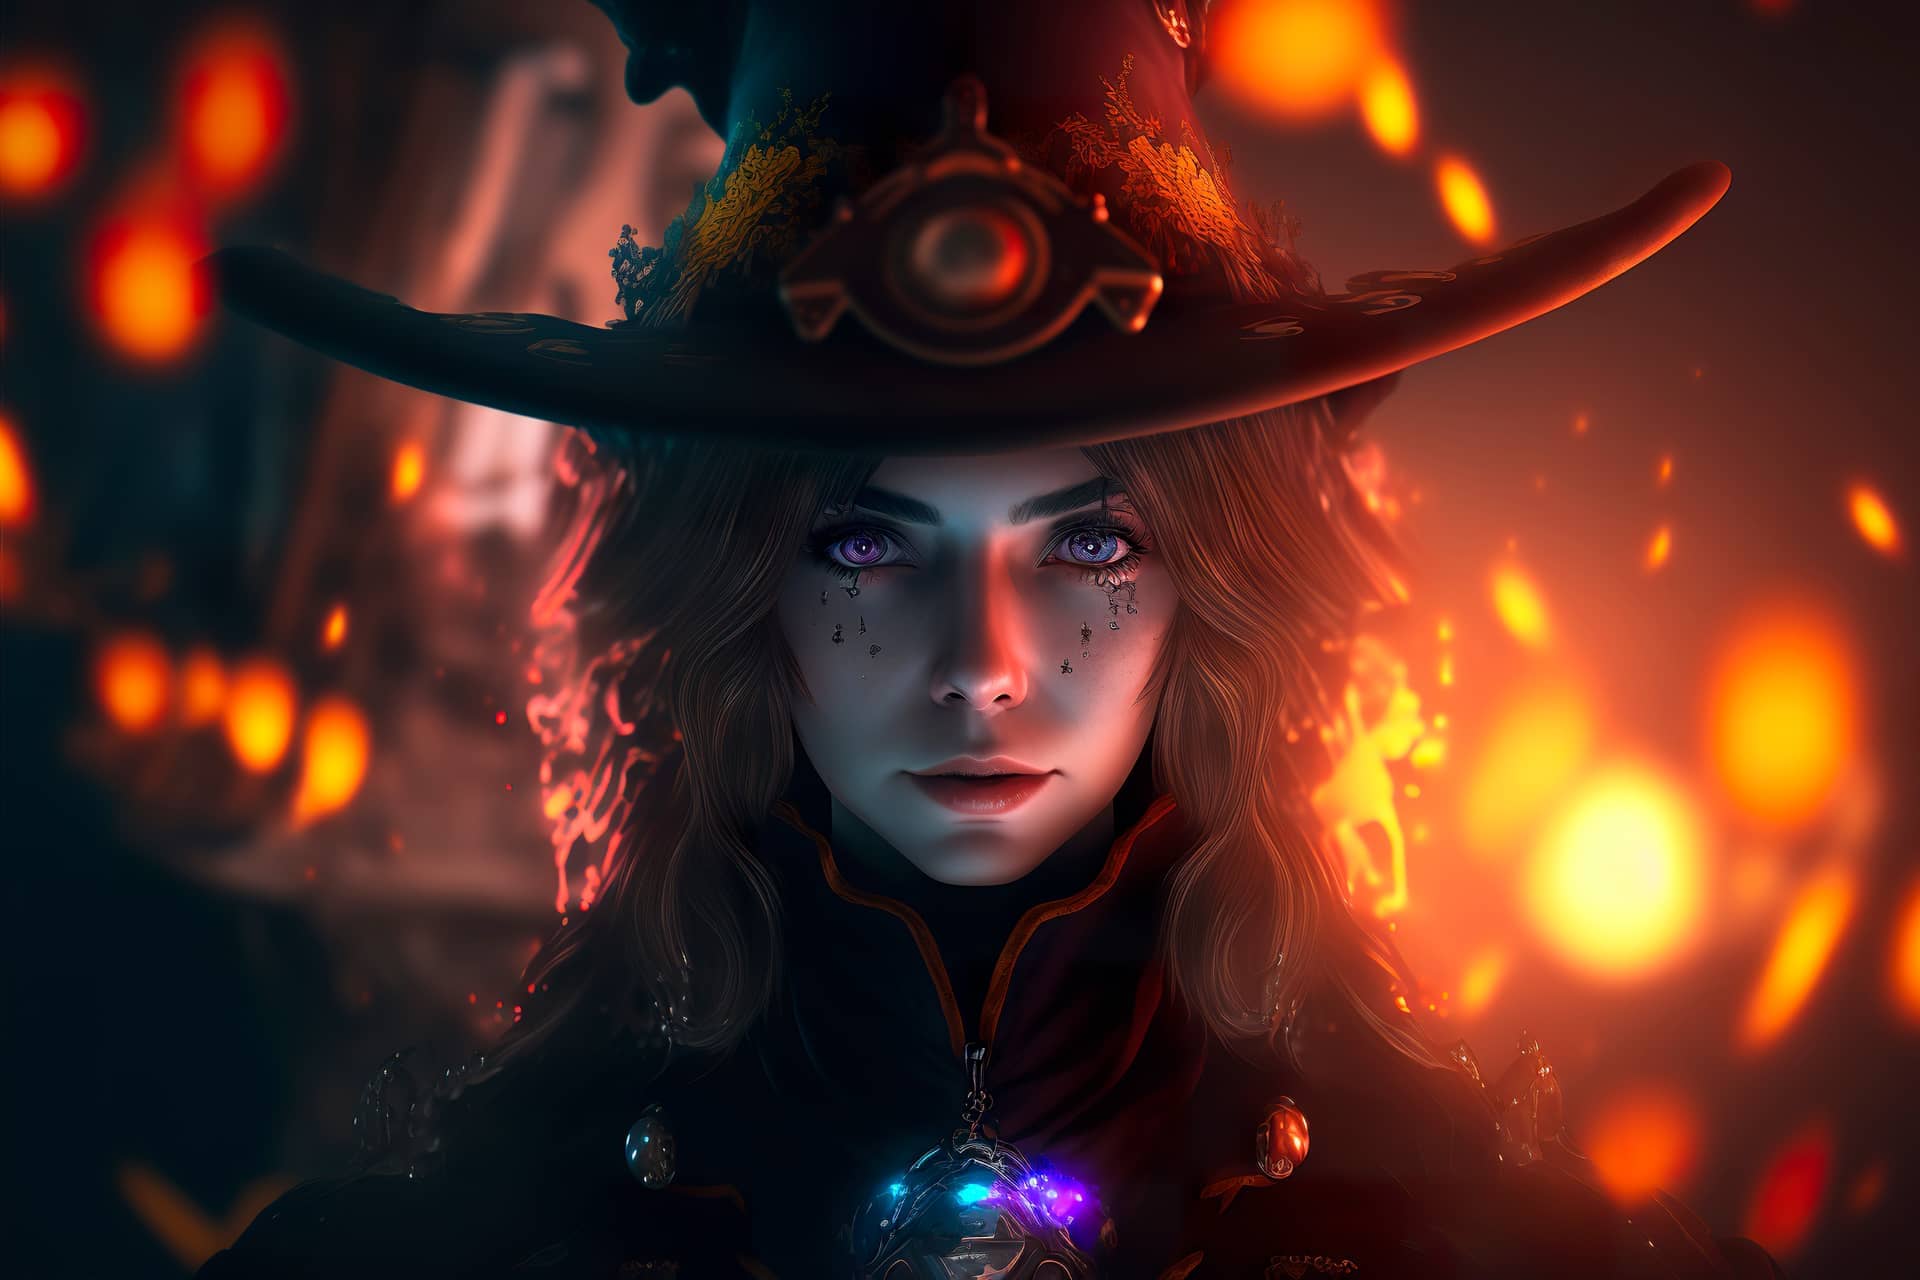 Cool instagram profile pics portrait anime fantasy girl witch digital art